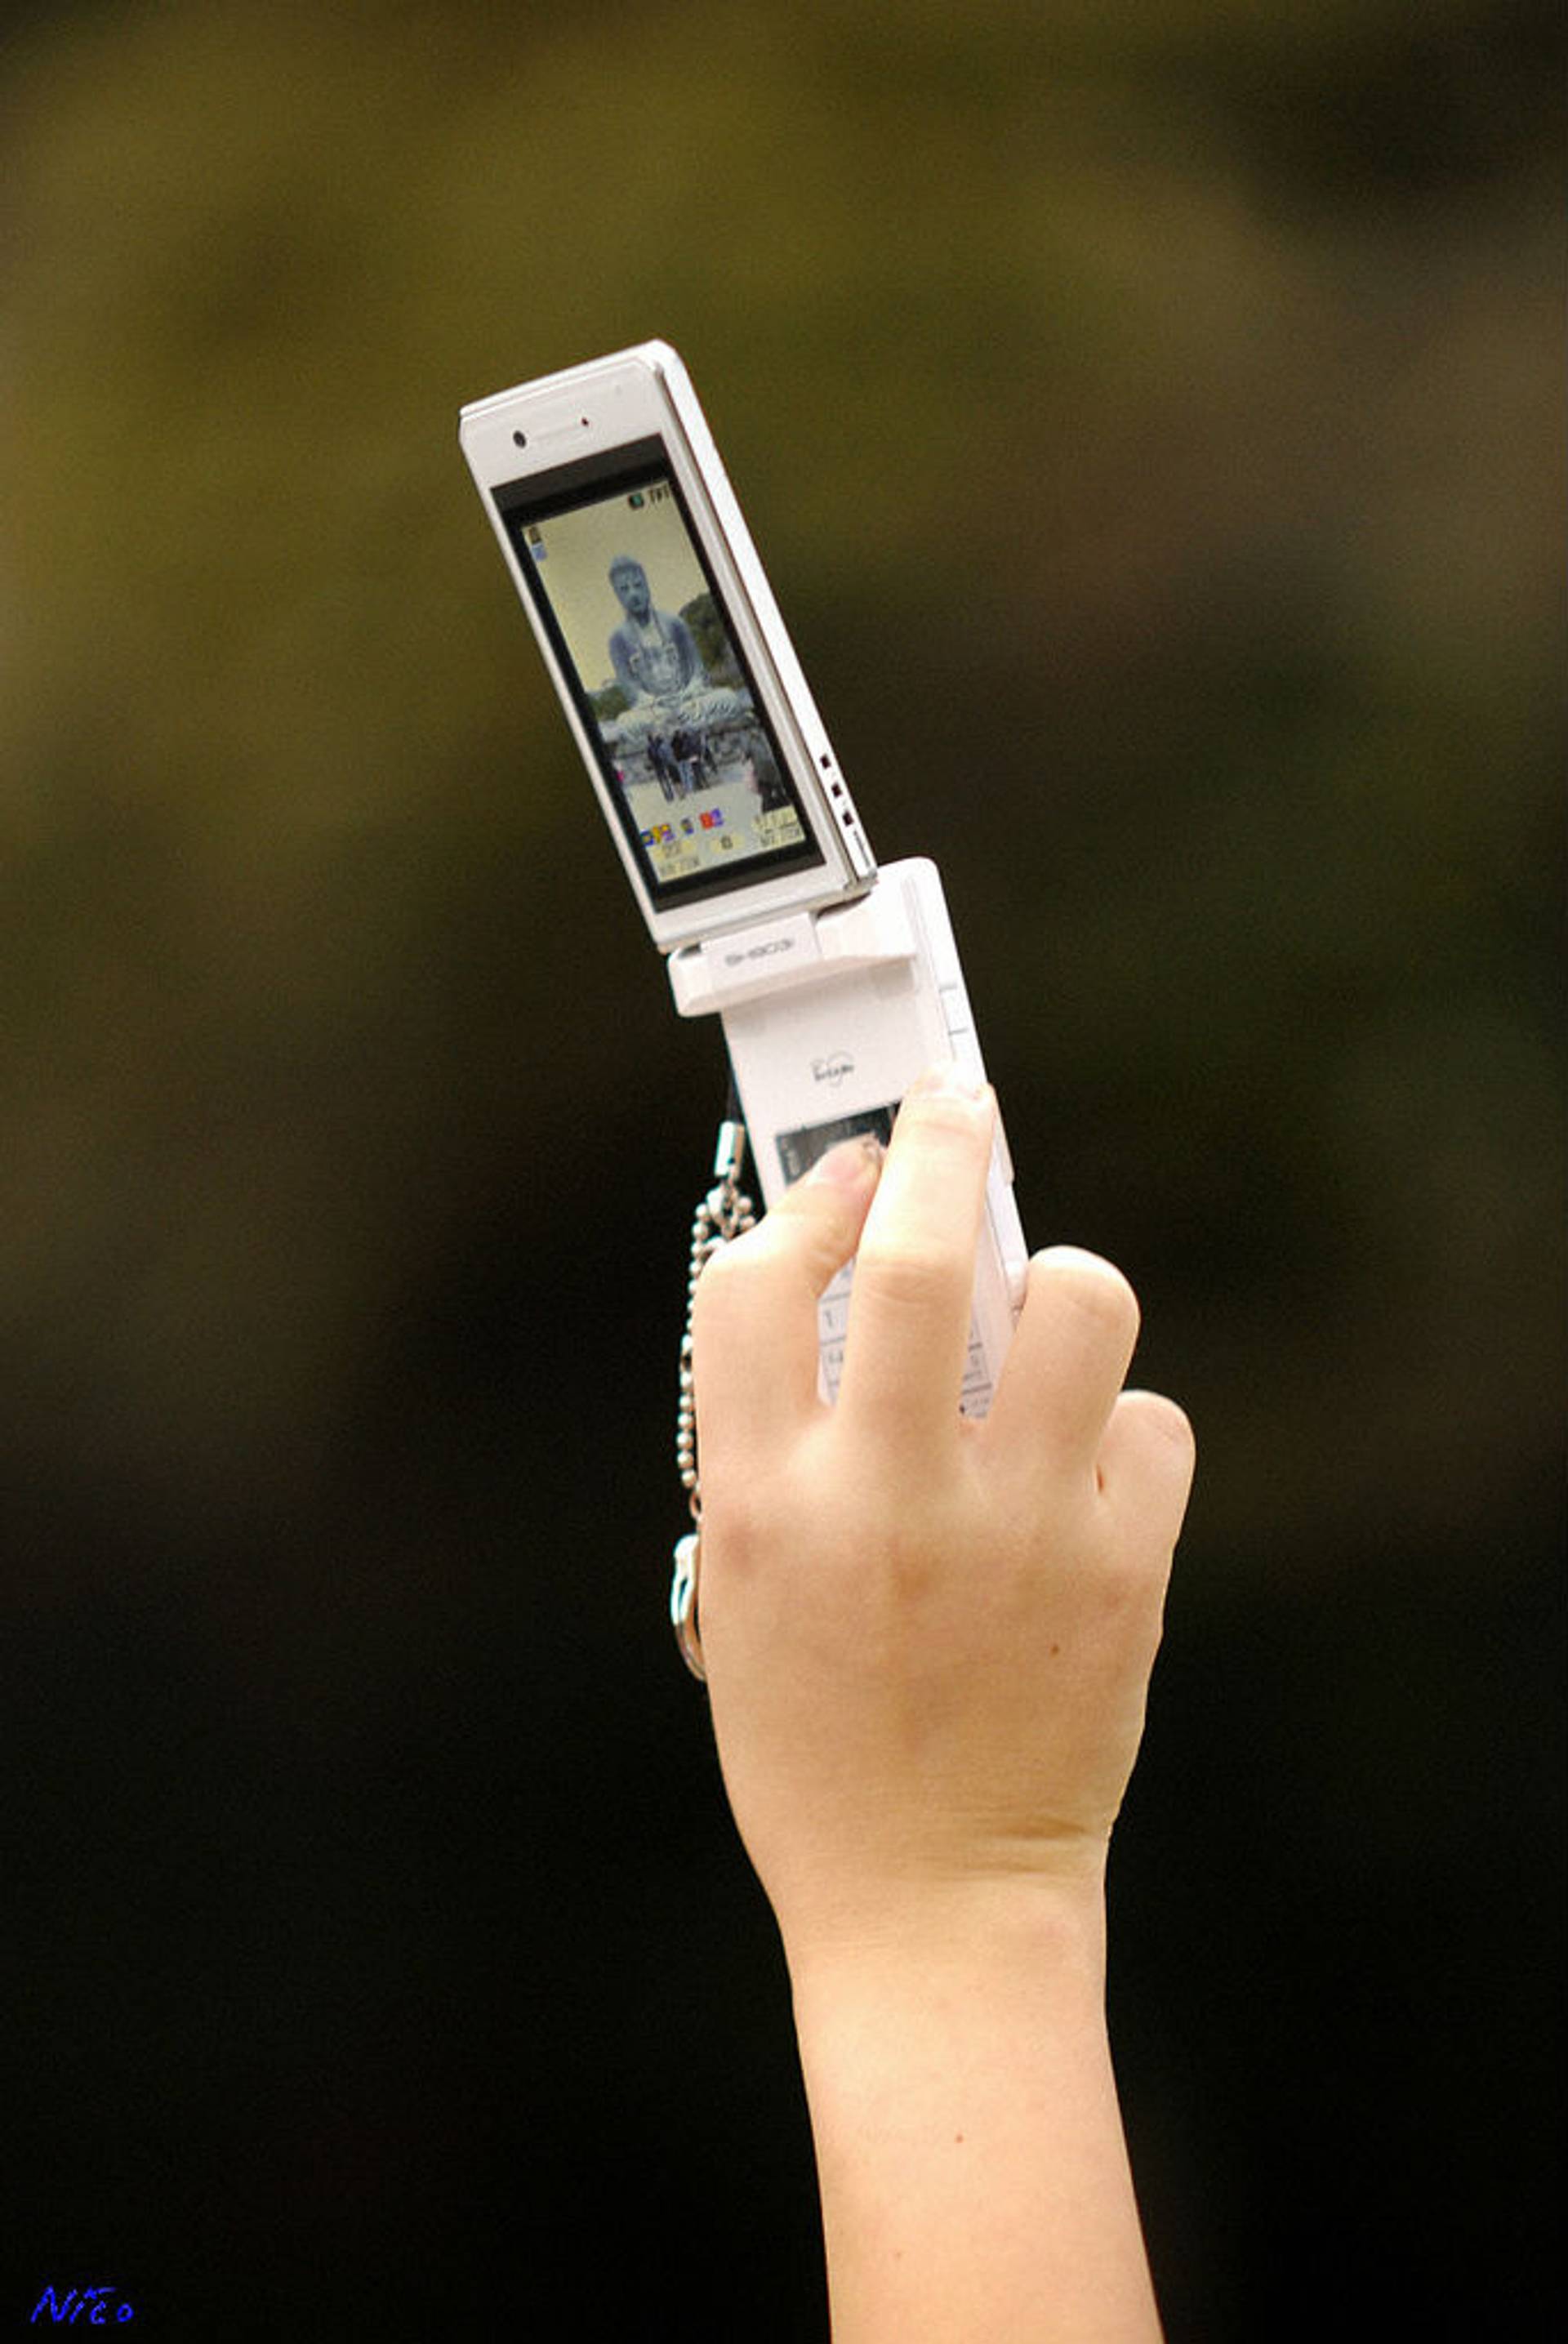 Flip-phones make a comeback in Japan